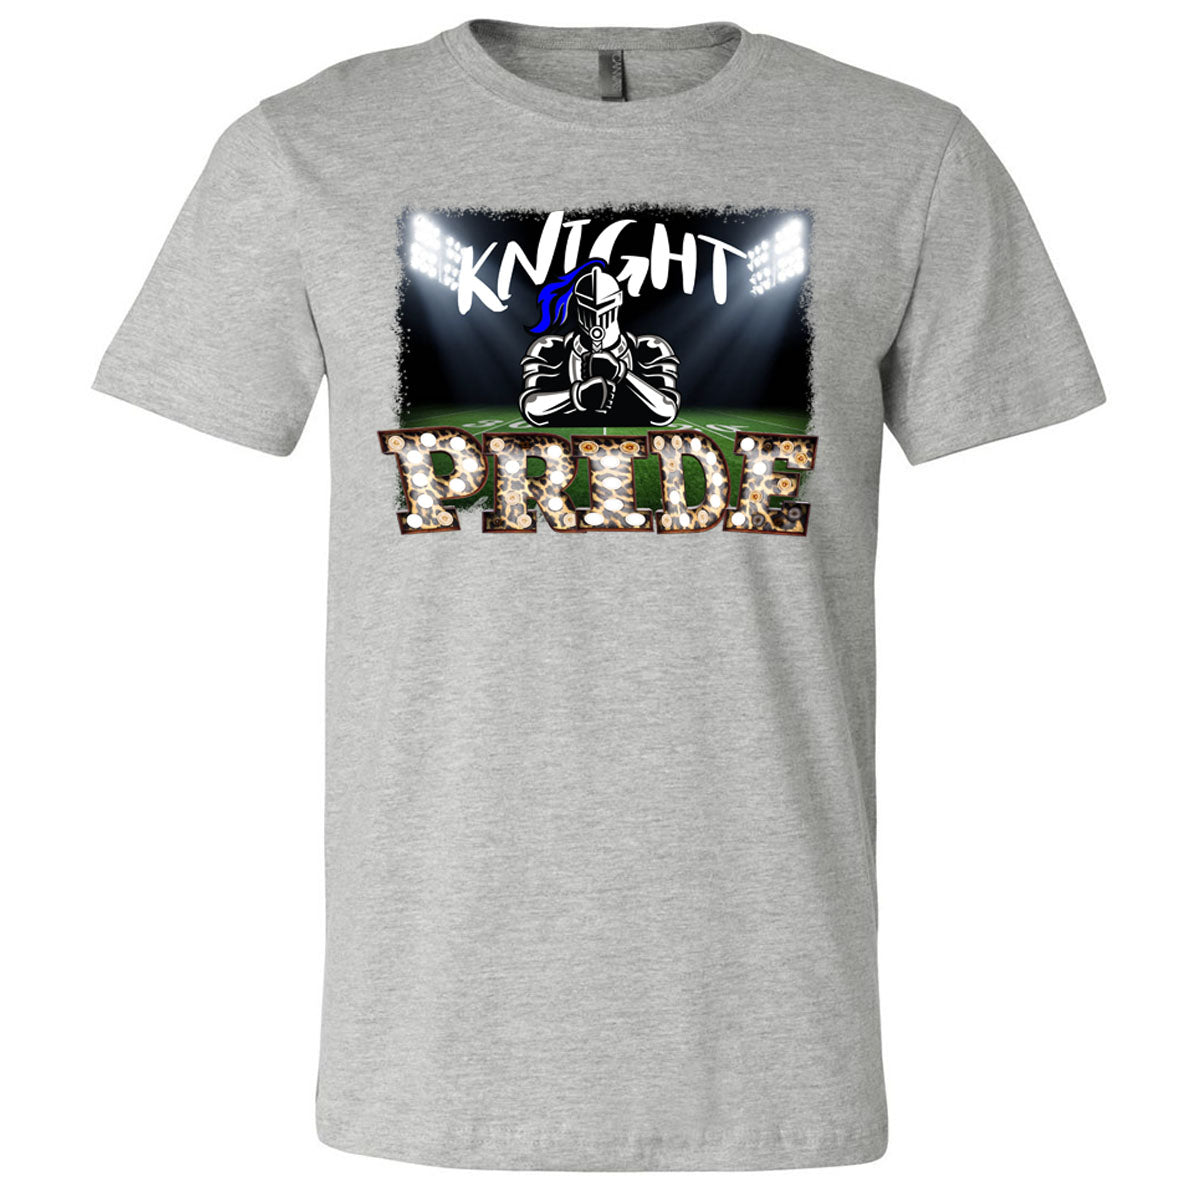 Windsor - Football - Knight Pride Marquee - Athletic Heather (Tee/Hoodie/Sweatshirt) - Southern Grace Creations